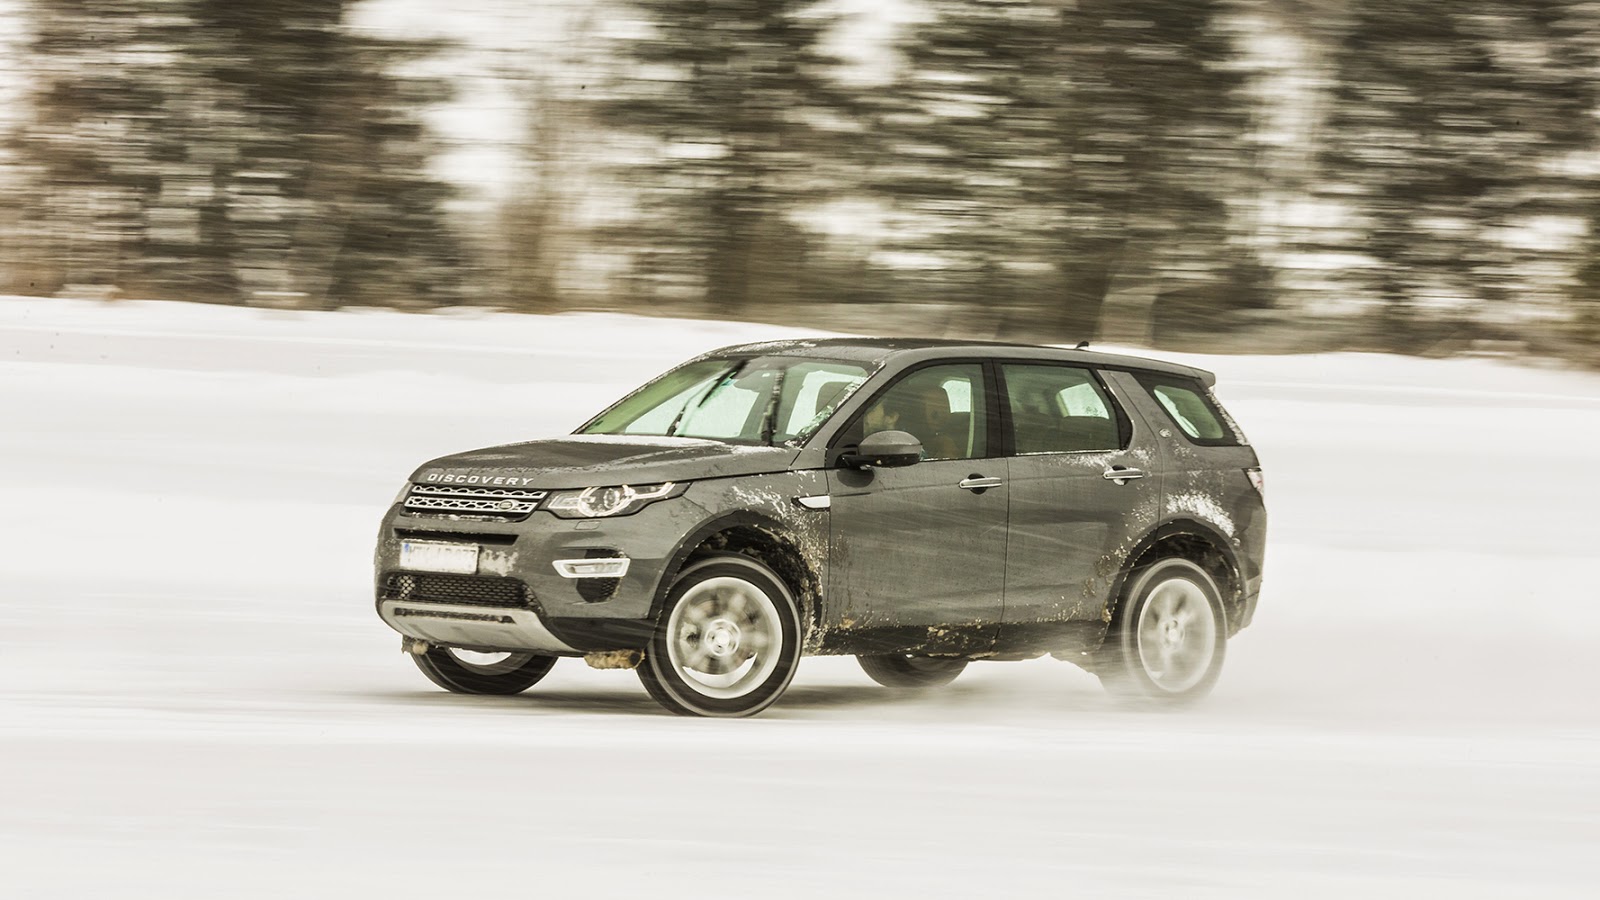 2015 Land Rover Discovery Sport | Photo © Land Rover Österreich/Alexander Seger